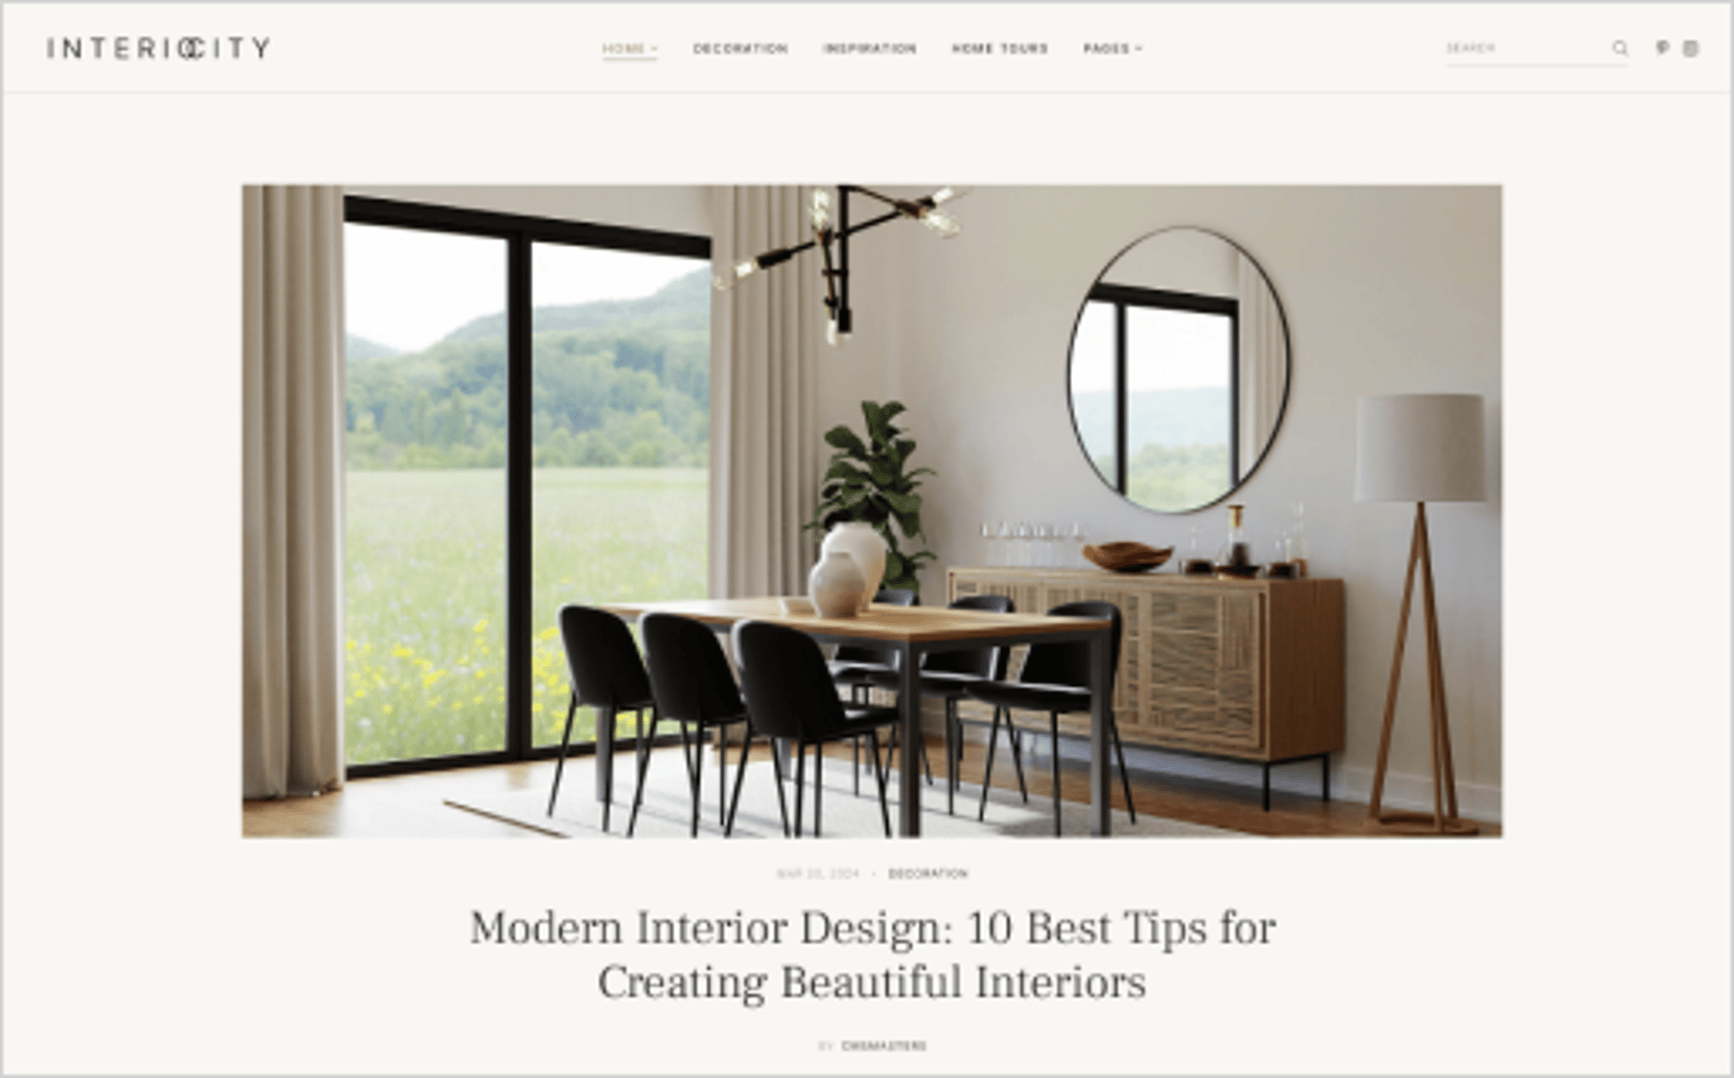 Interiocity - Home Decor Blog and Interior Design Magazine WordPress Theme - Interior Design Magazine | CMSMasters studio